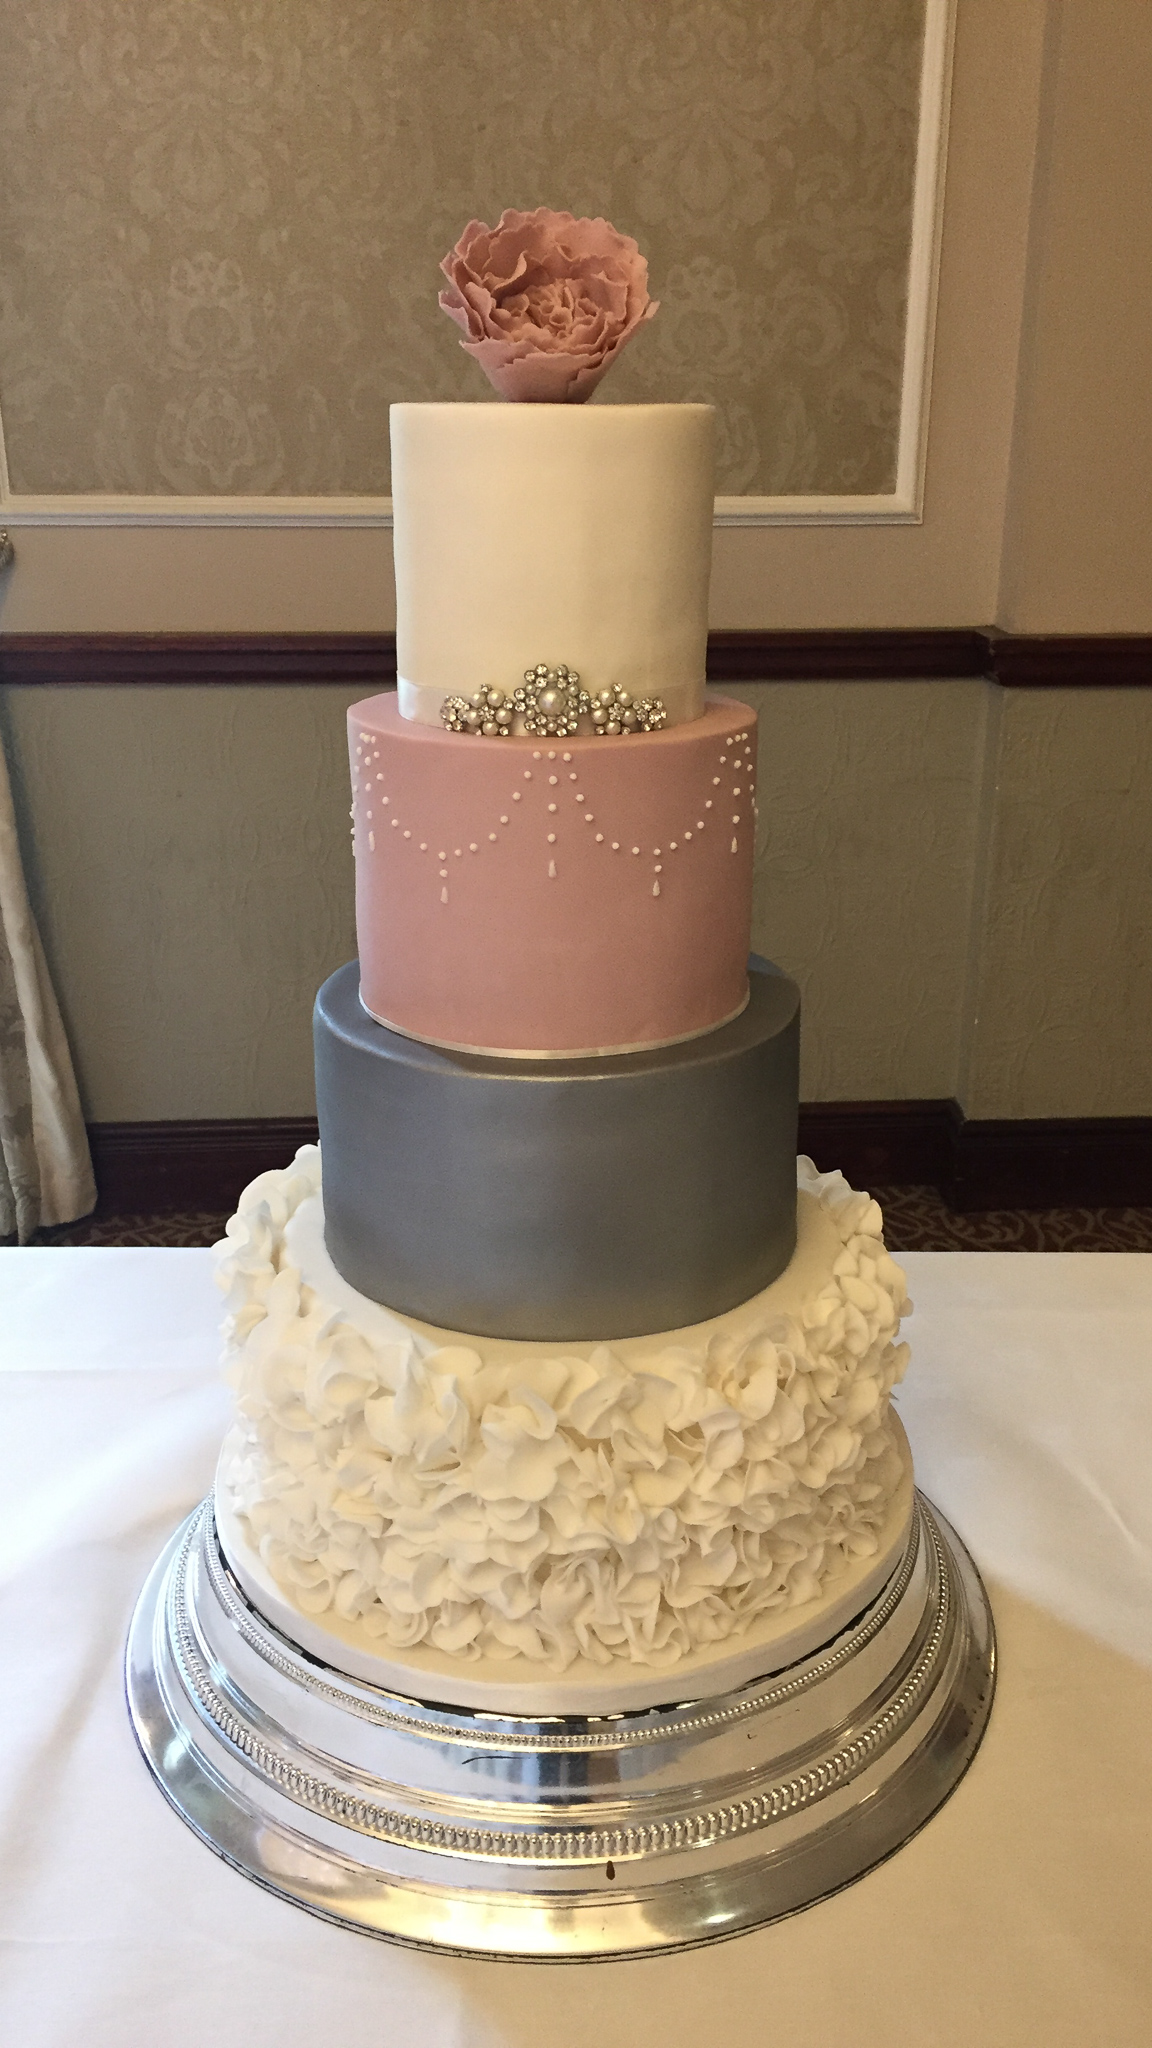 Four-tier luxury wedding cake with sugar ruffles